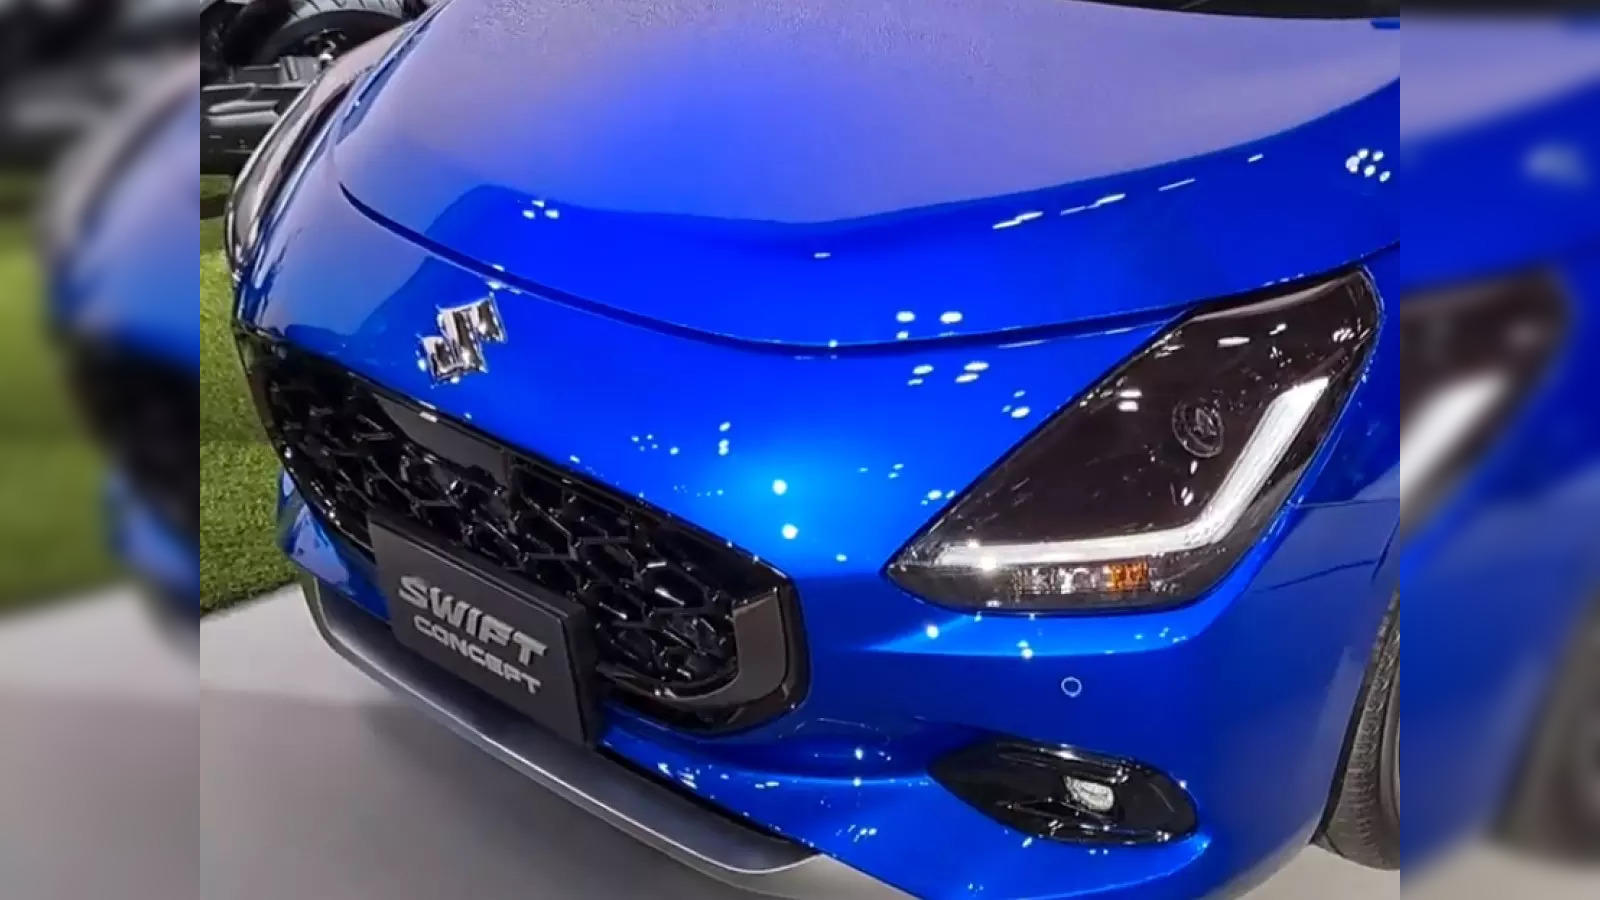 Suzuki introduces the new Swift